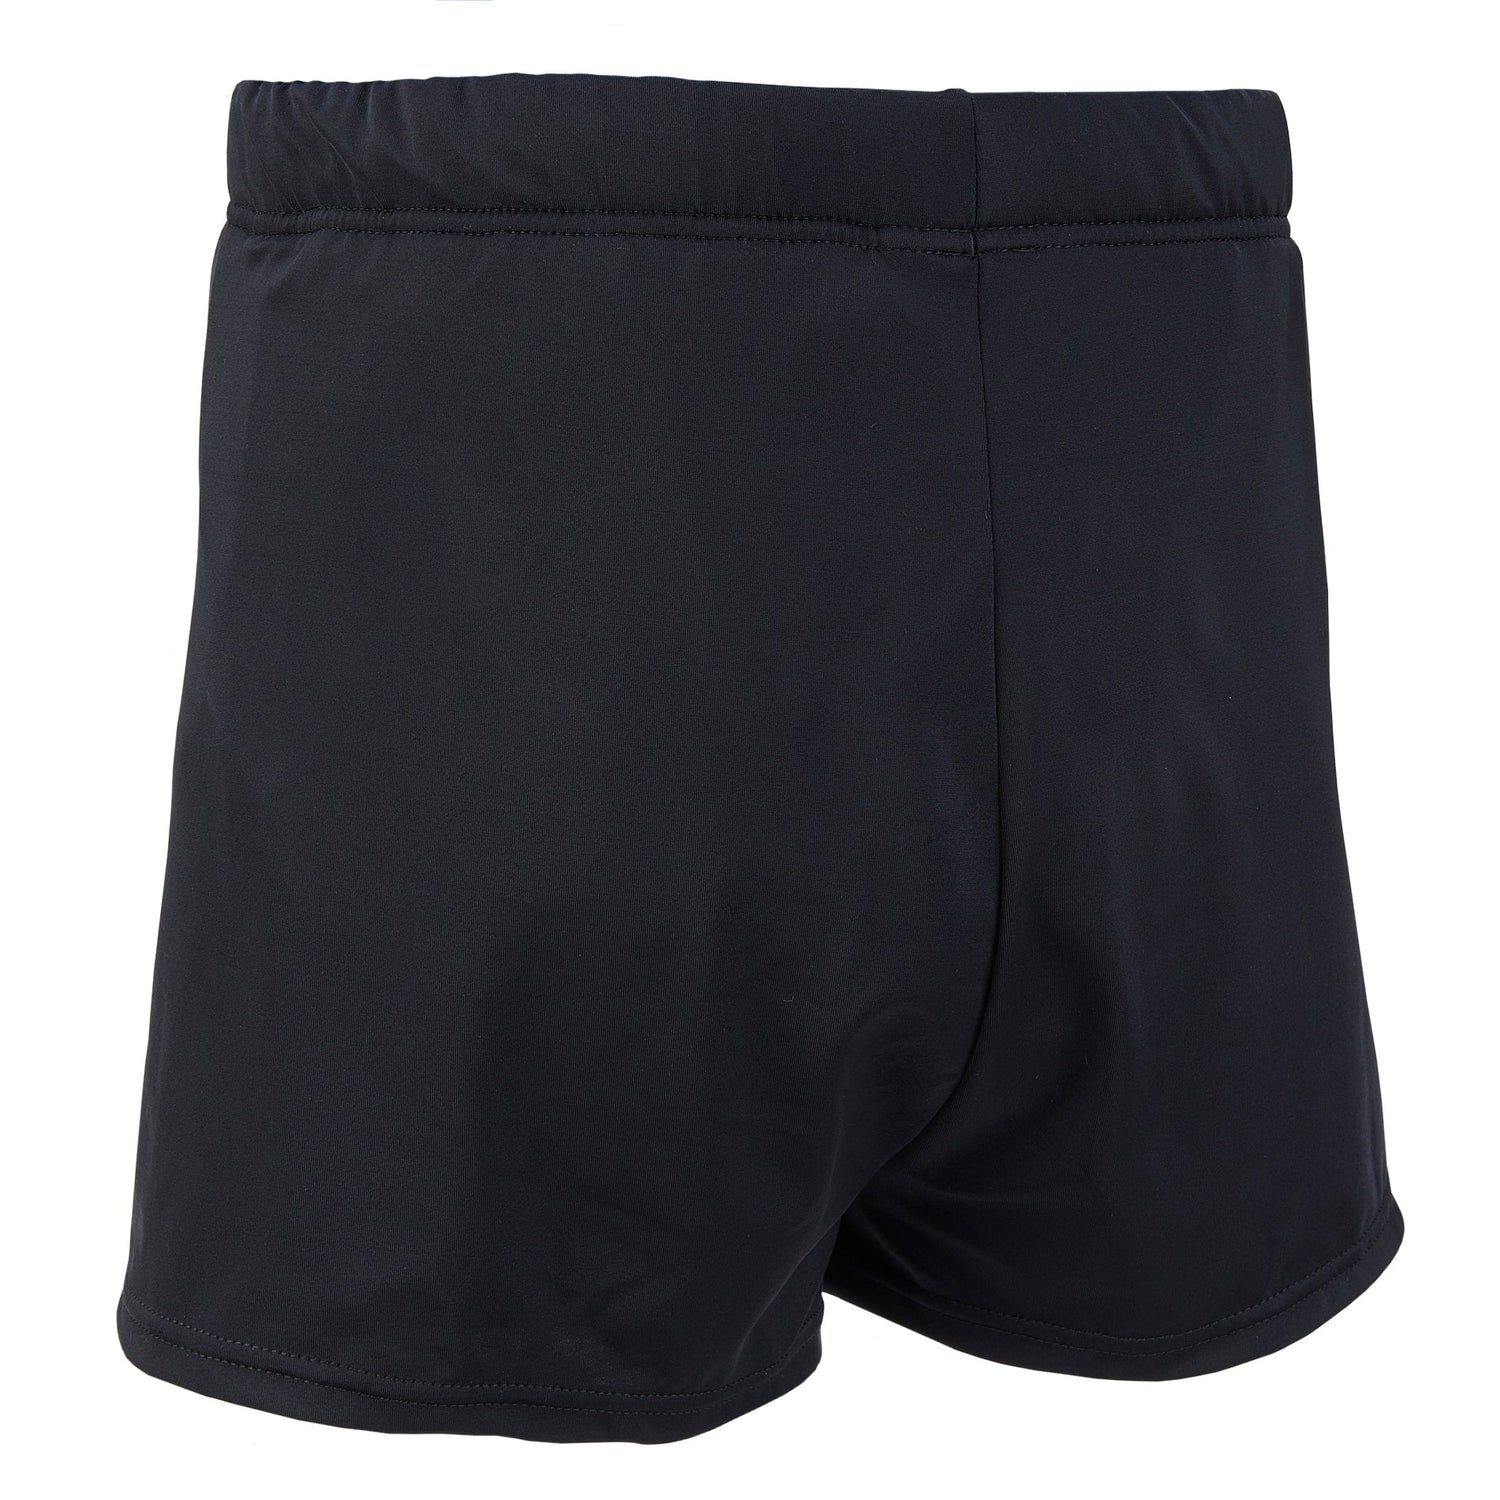 Kes-Vir Ladies Tankini Swim Shorts in Black